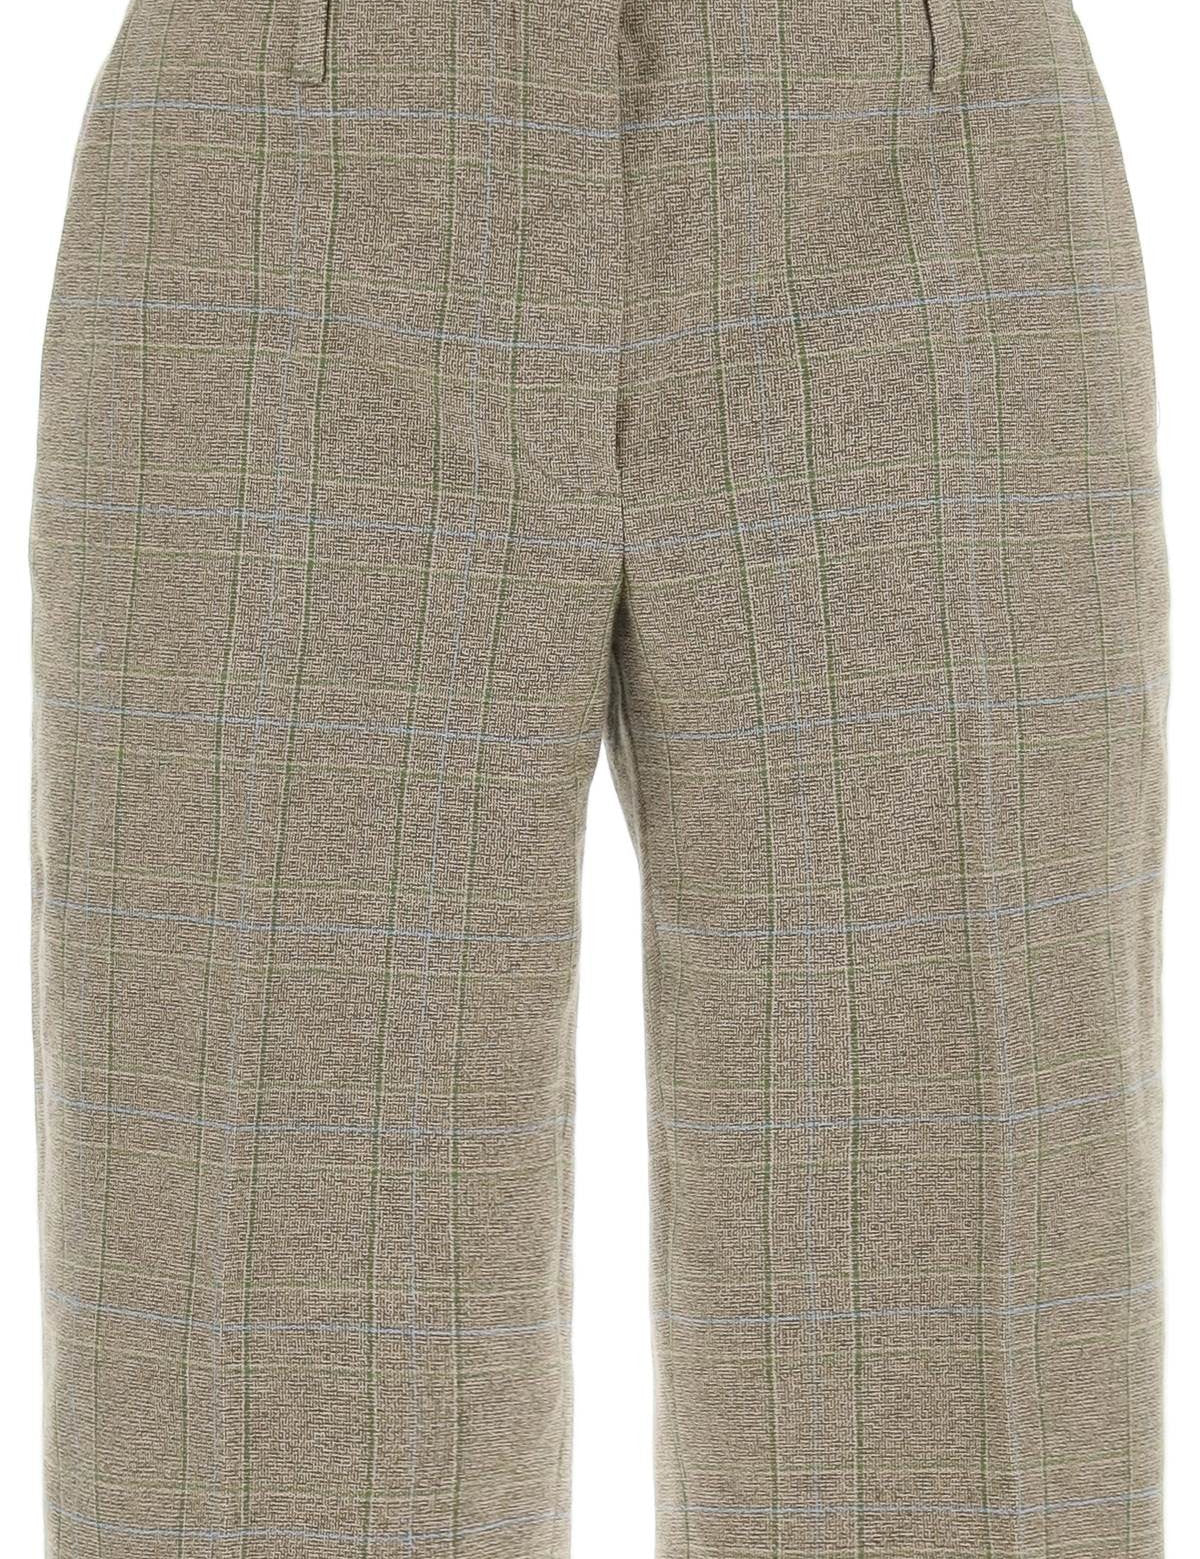 plaid-cotton-blend-bermuda-shorts-in.jpg